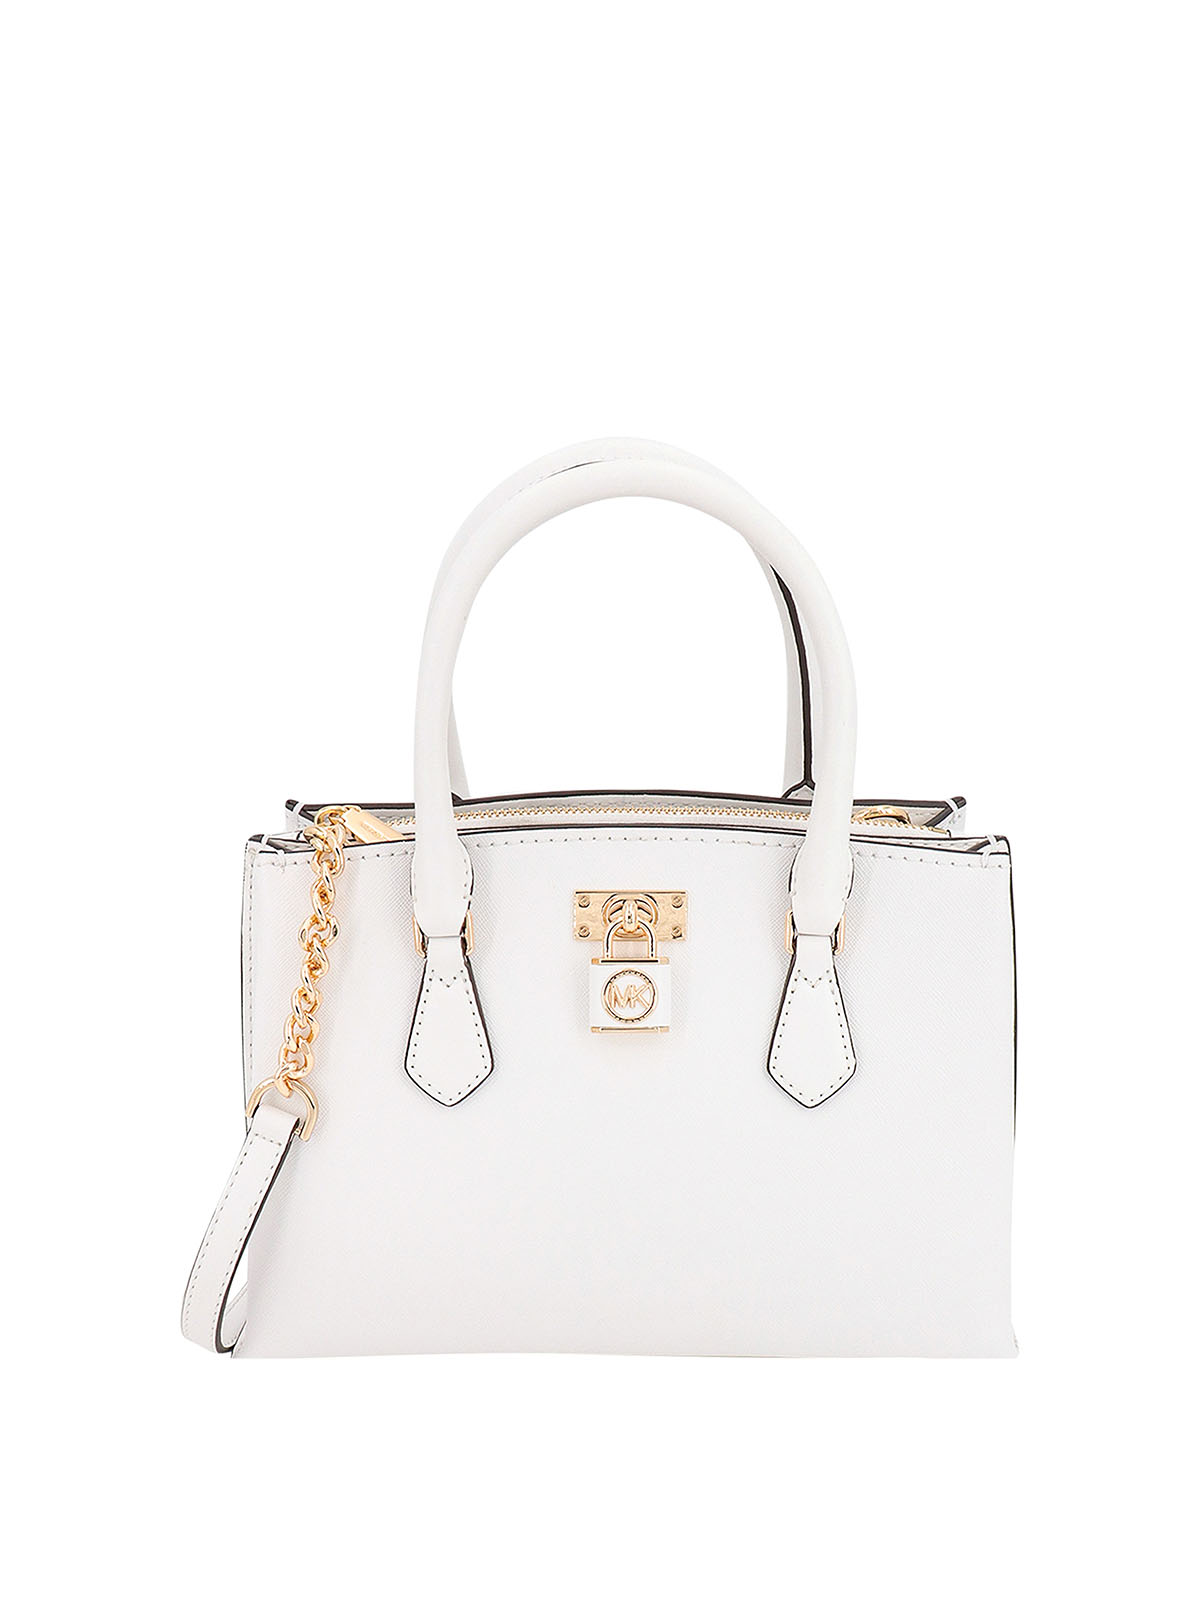 Michael Kors Saffiano Leather Handbag In White